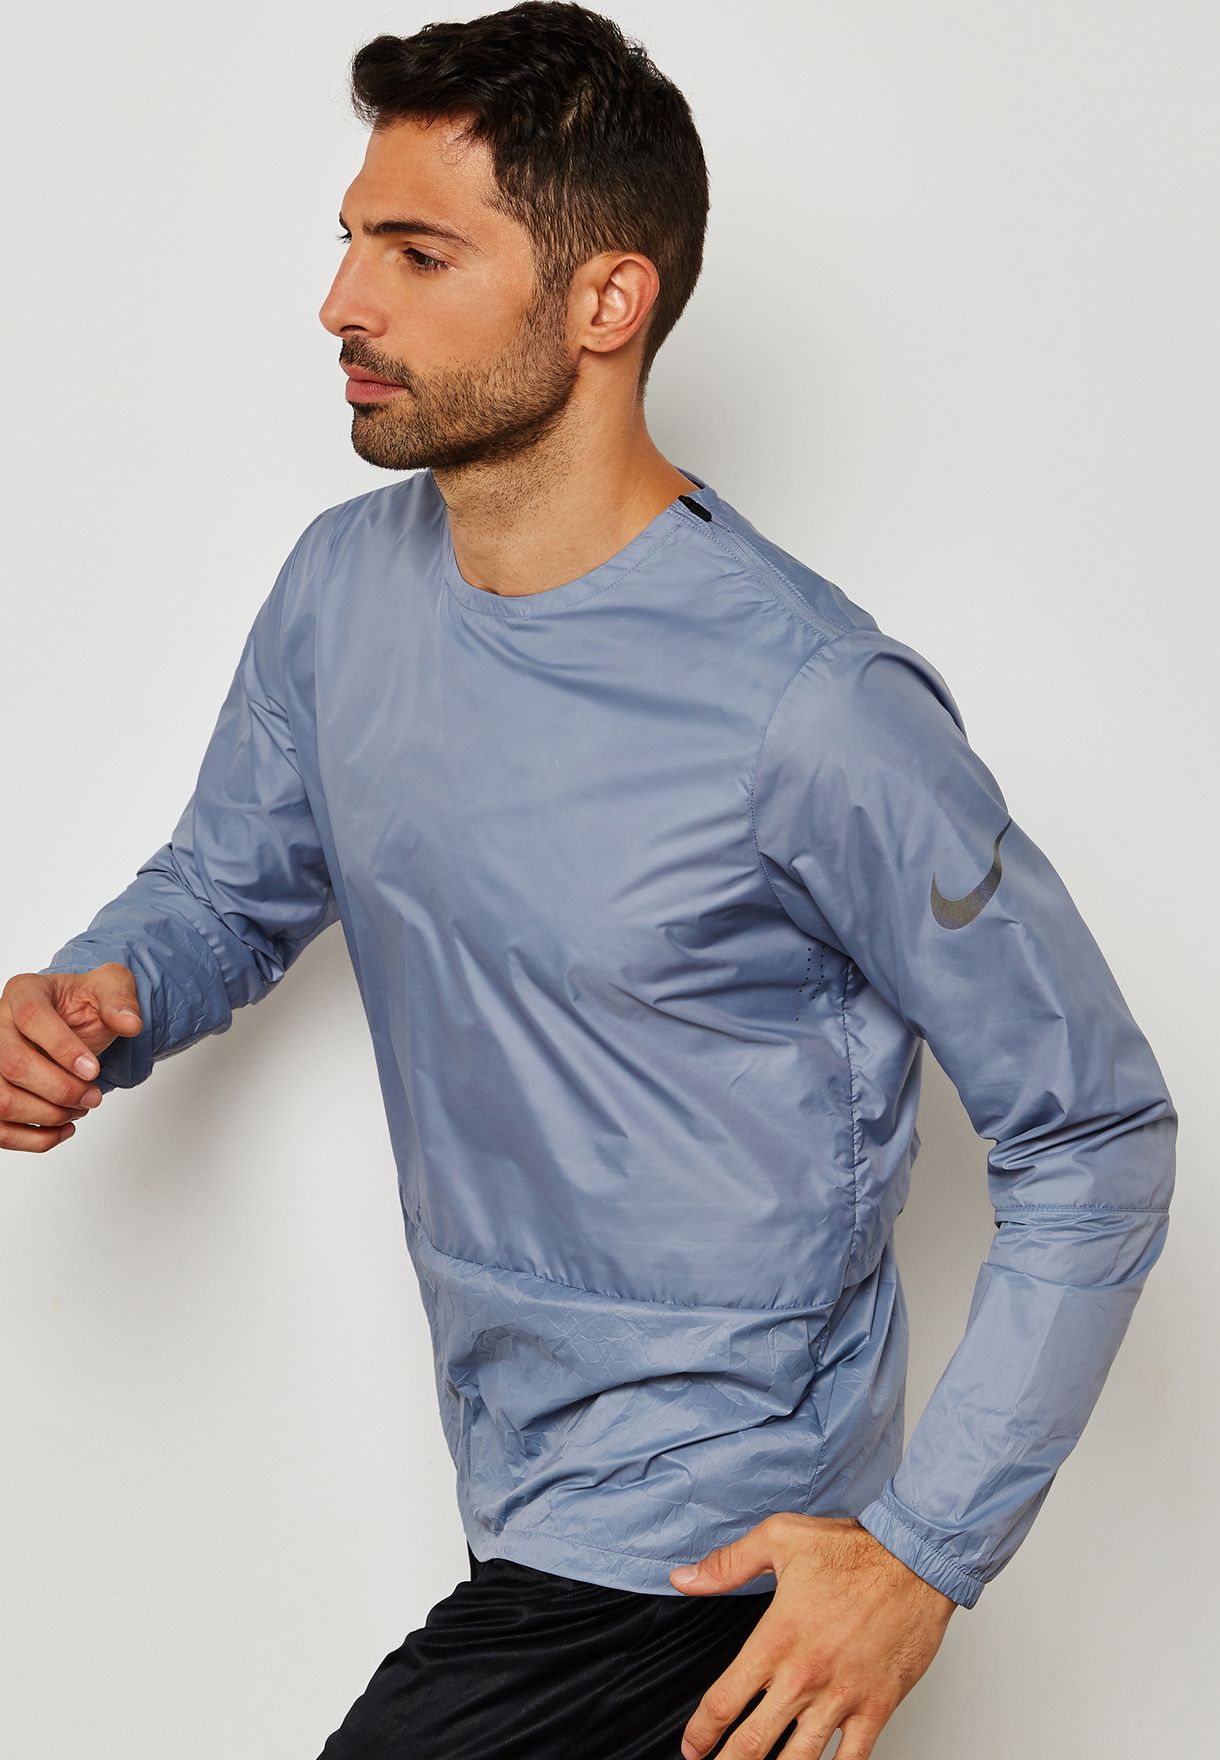 Nike grey Crinkle Crew Jacket for Men 